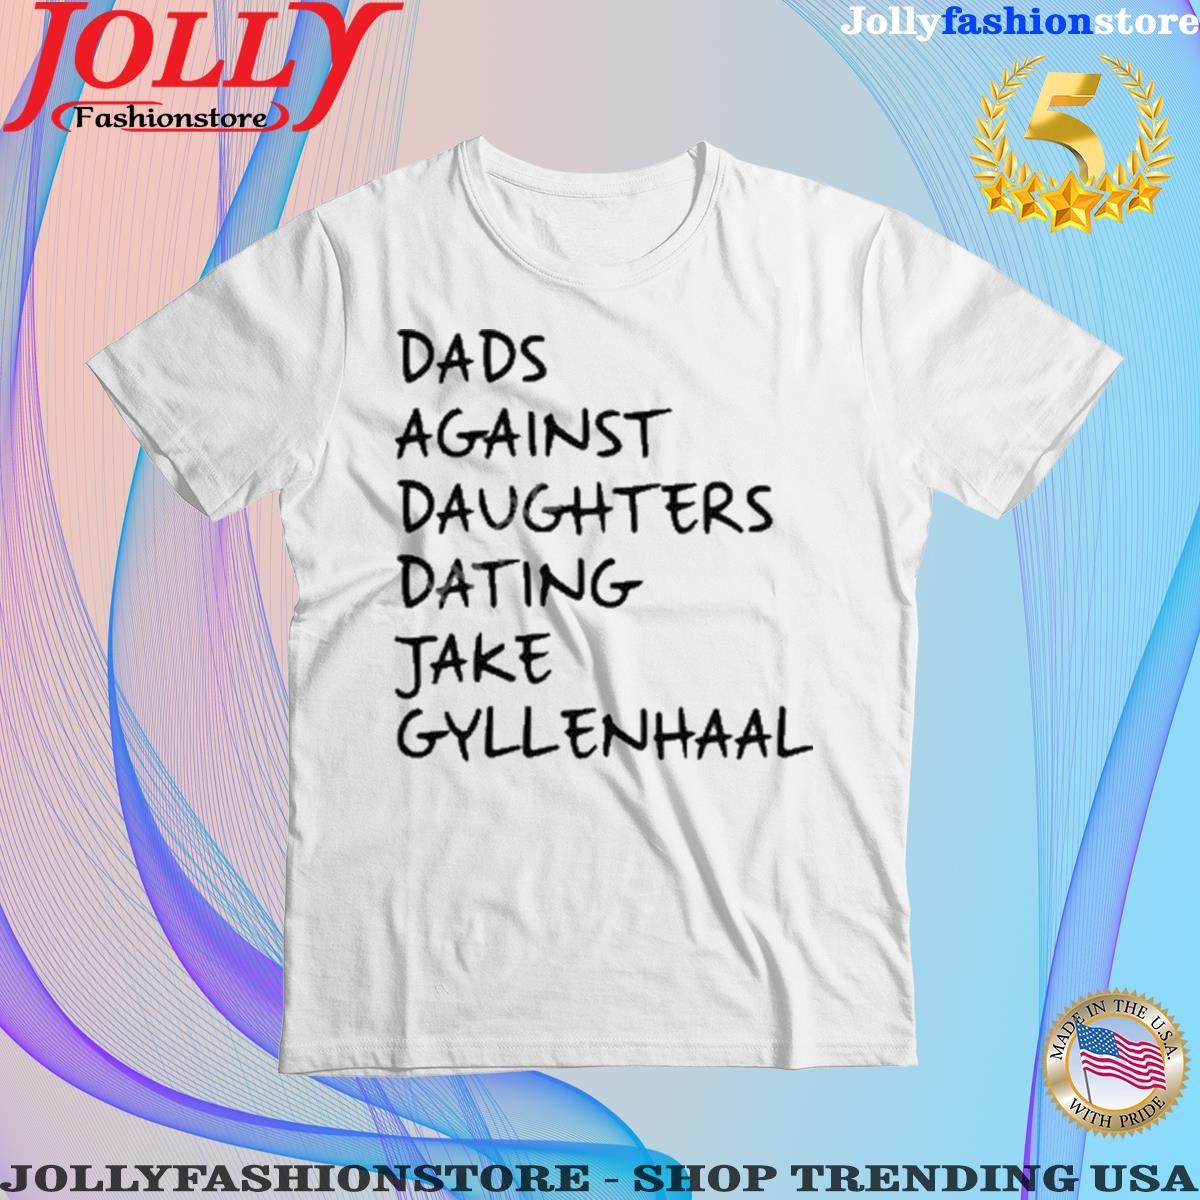 Dads Against Daughters Dating Jake Gyllenhaal Tee Shirt